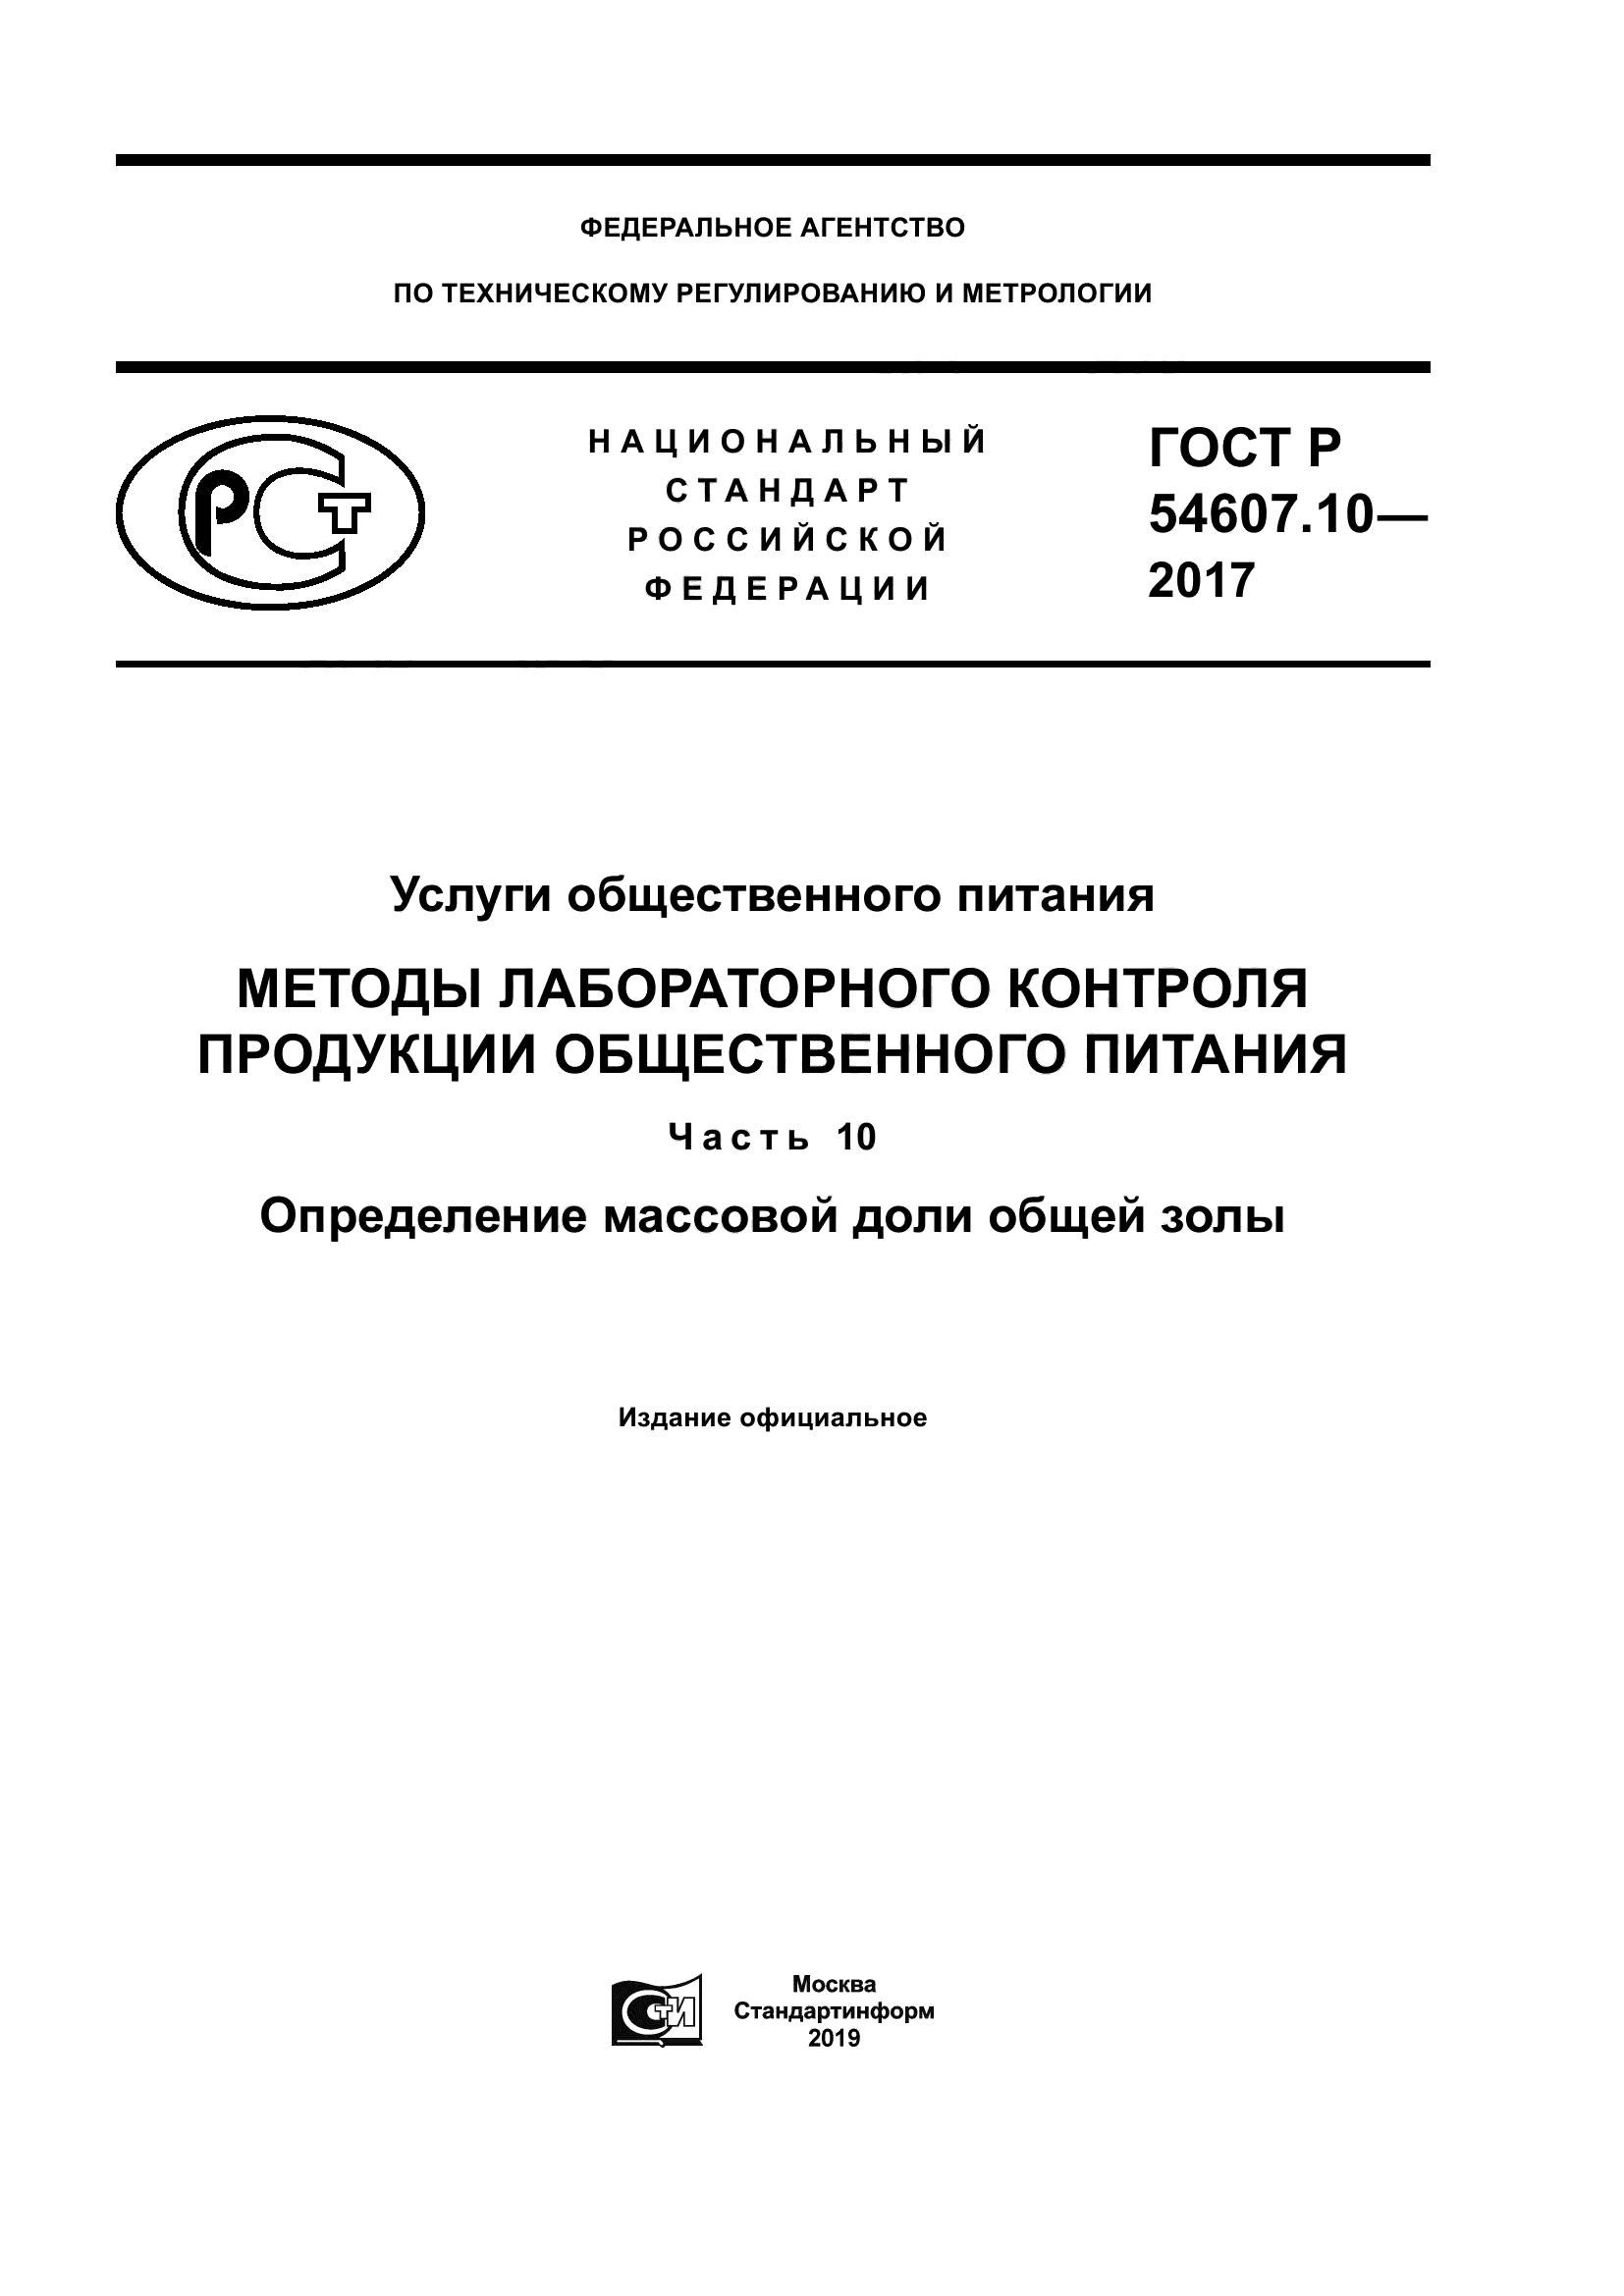 ГОСТ Р 54607.10-2017